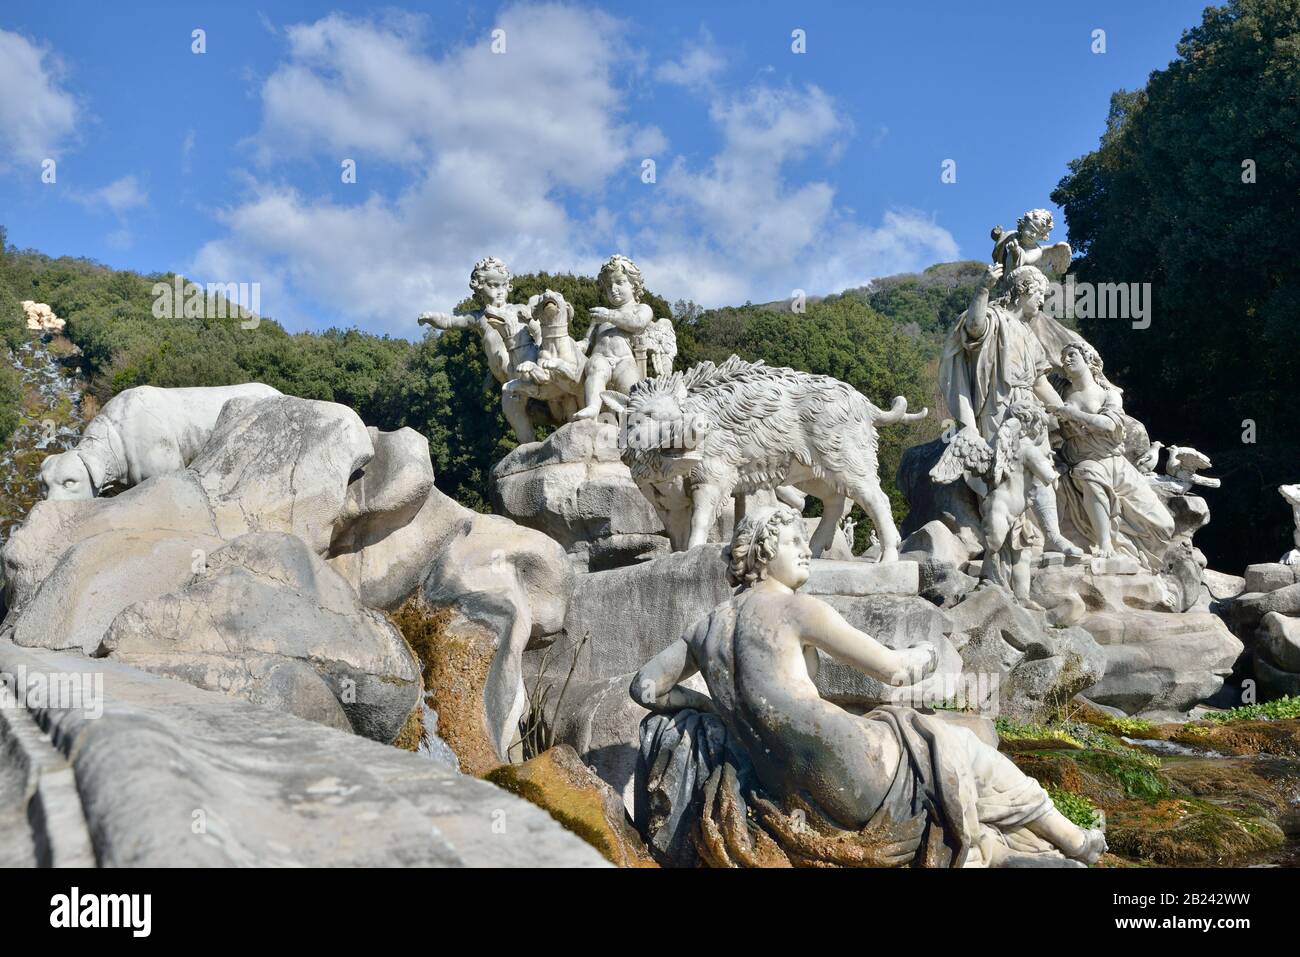 Reggia di Caserta (Vénus et fontaine Adonis - Fontana di Venere e Adone - Gaetano Salomone), site classé au patrimoine mondial de l'UNESCO - Campanie, Italie, Europe Banque D'Images